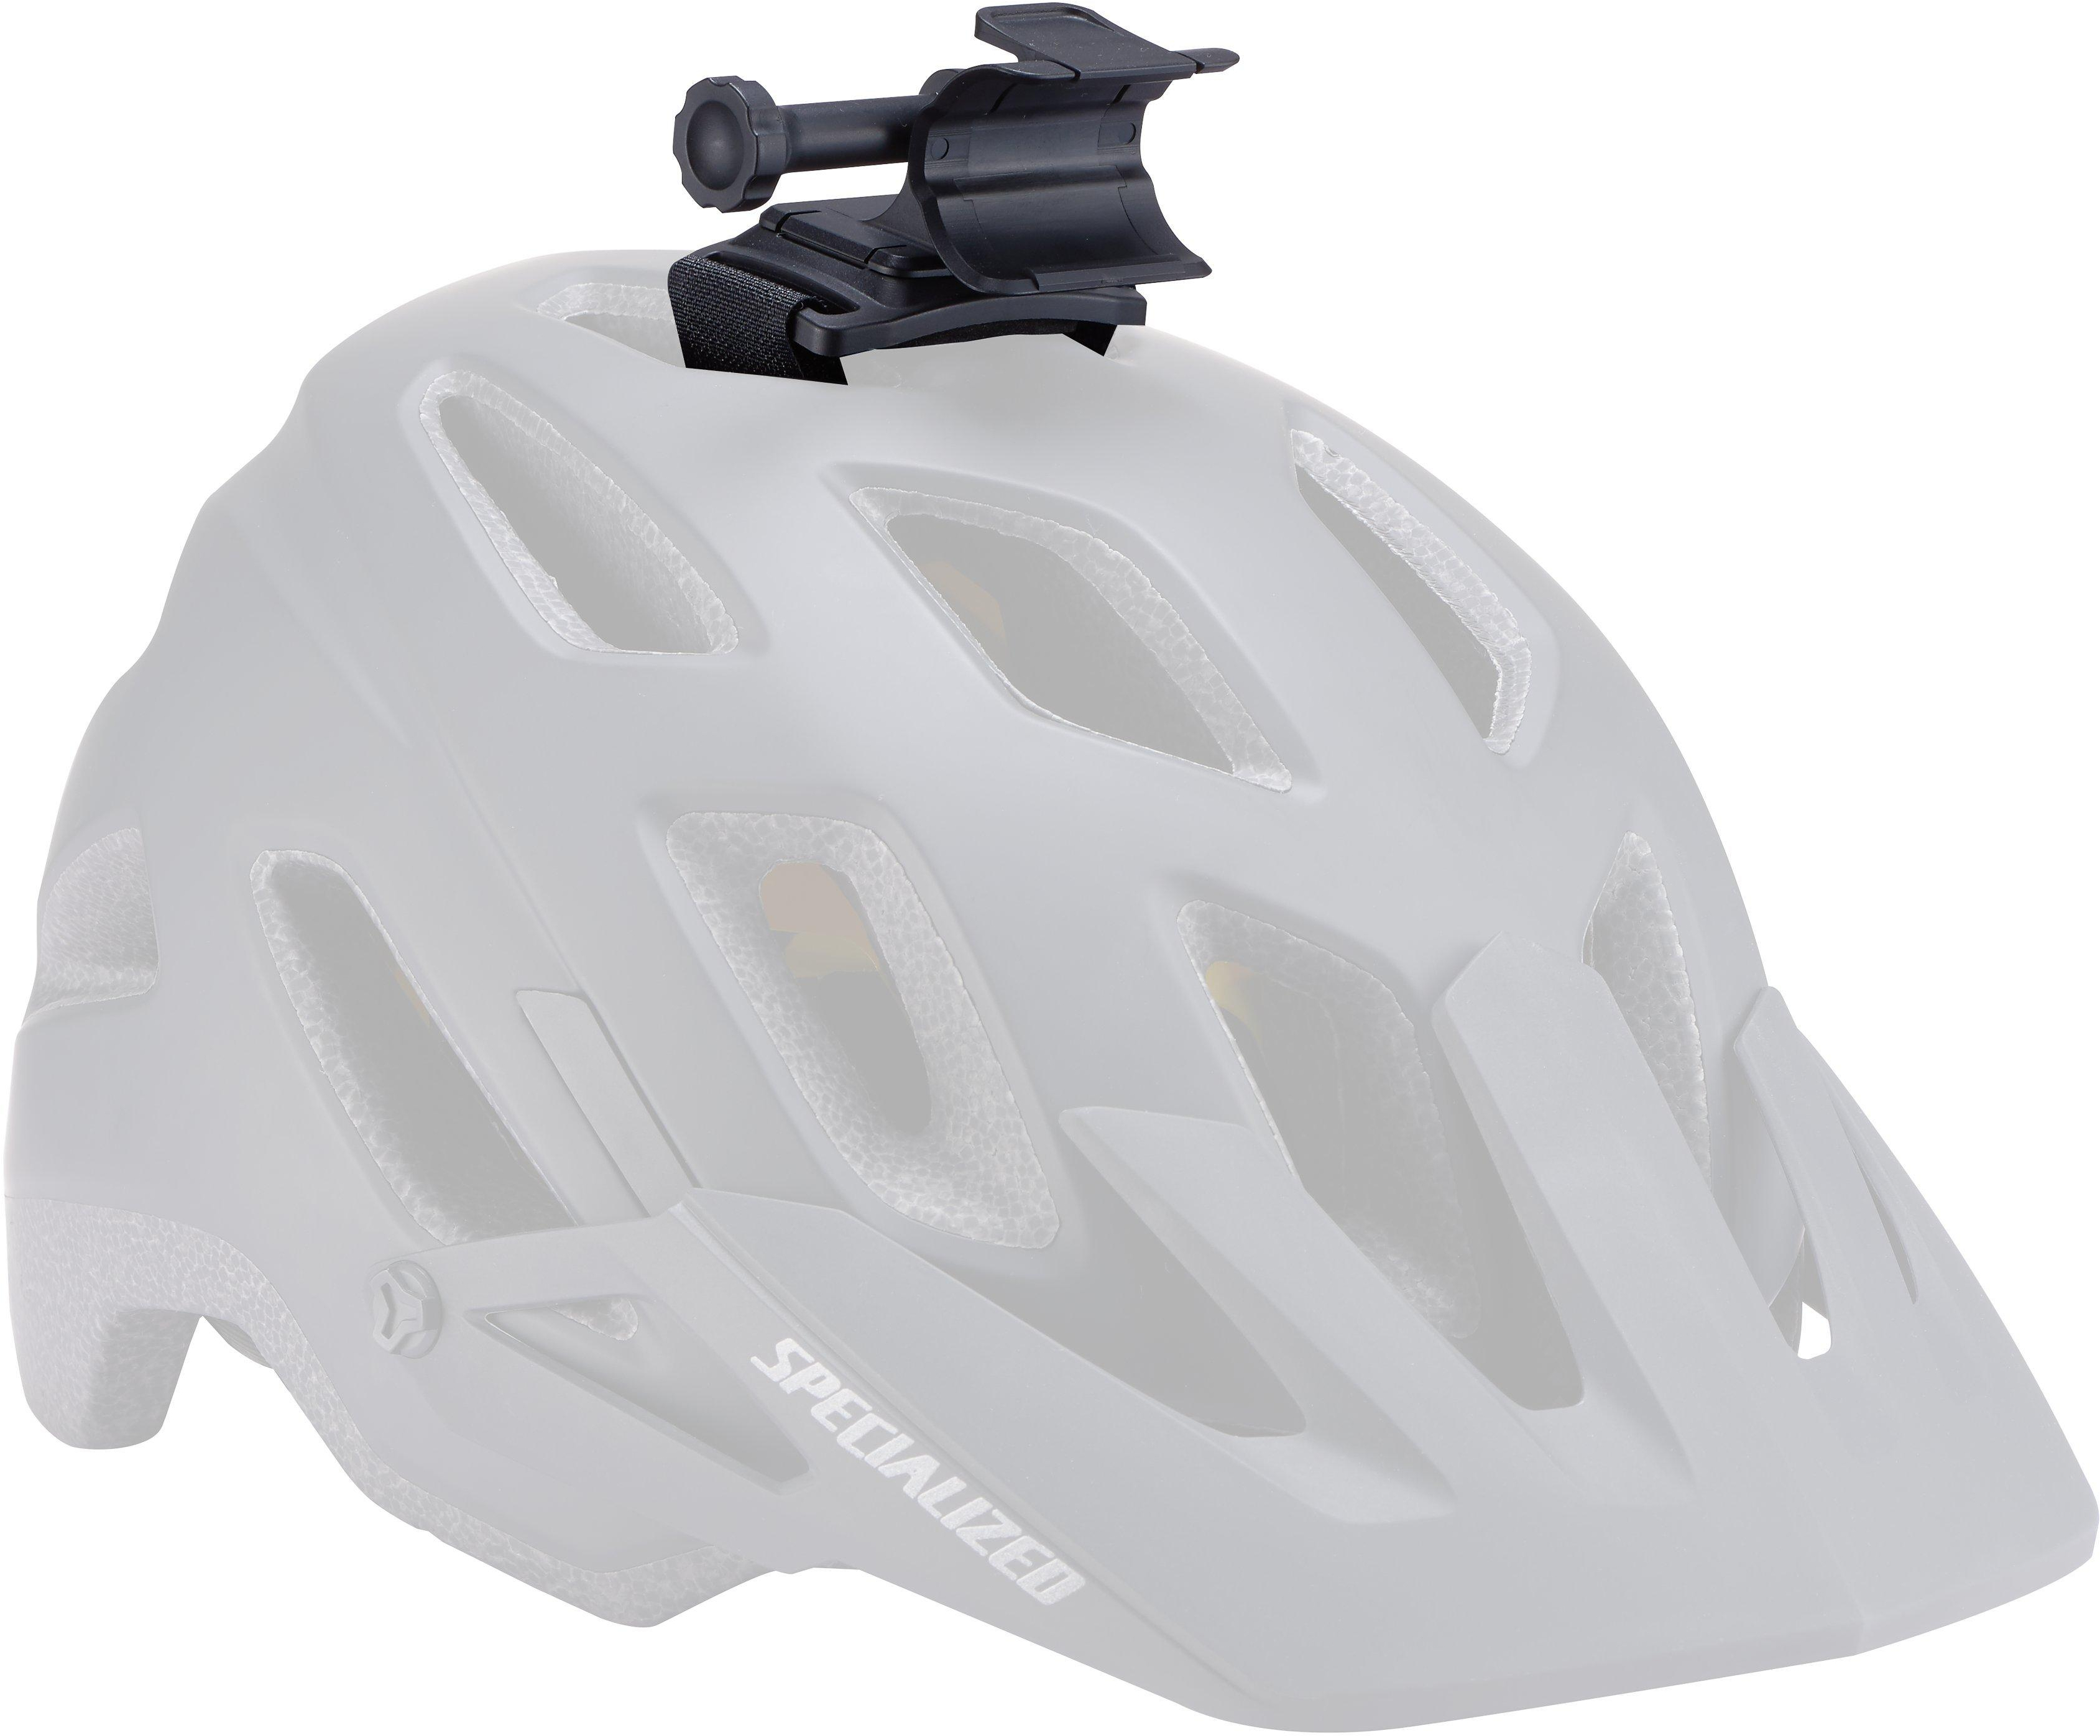 Specialized  Flux 900/1200 Headlight Helmet Mount  Black